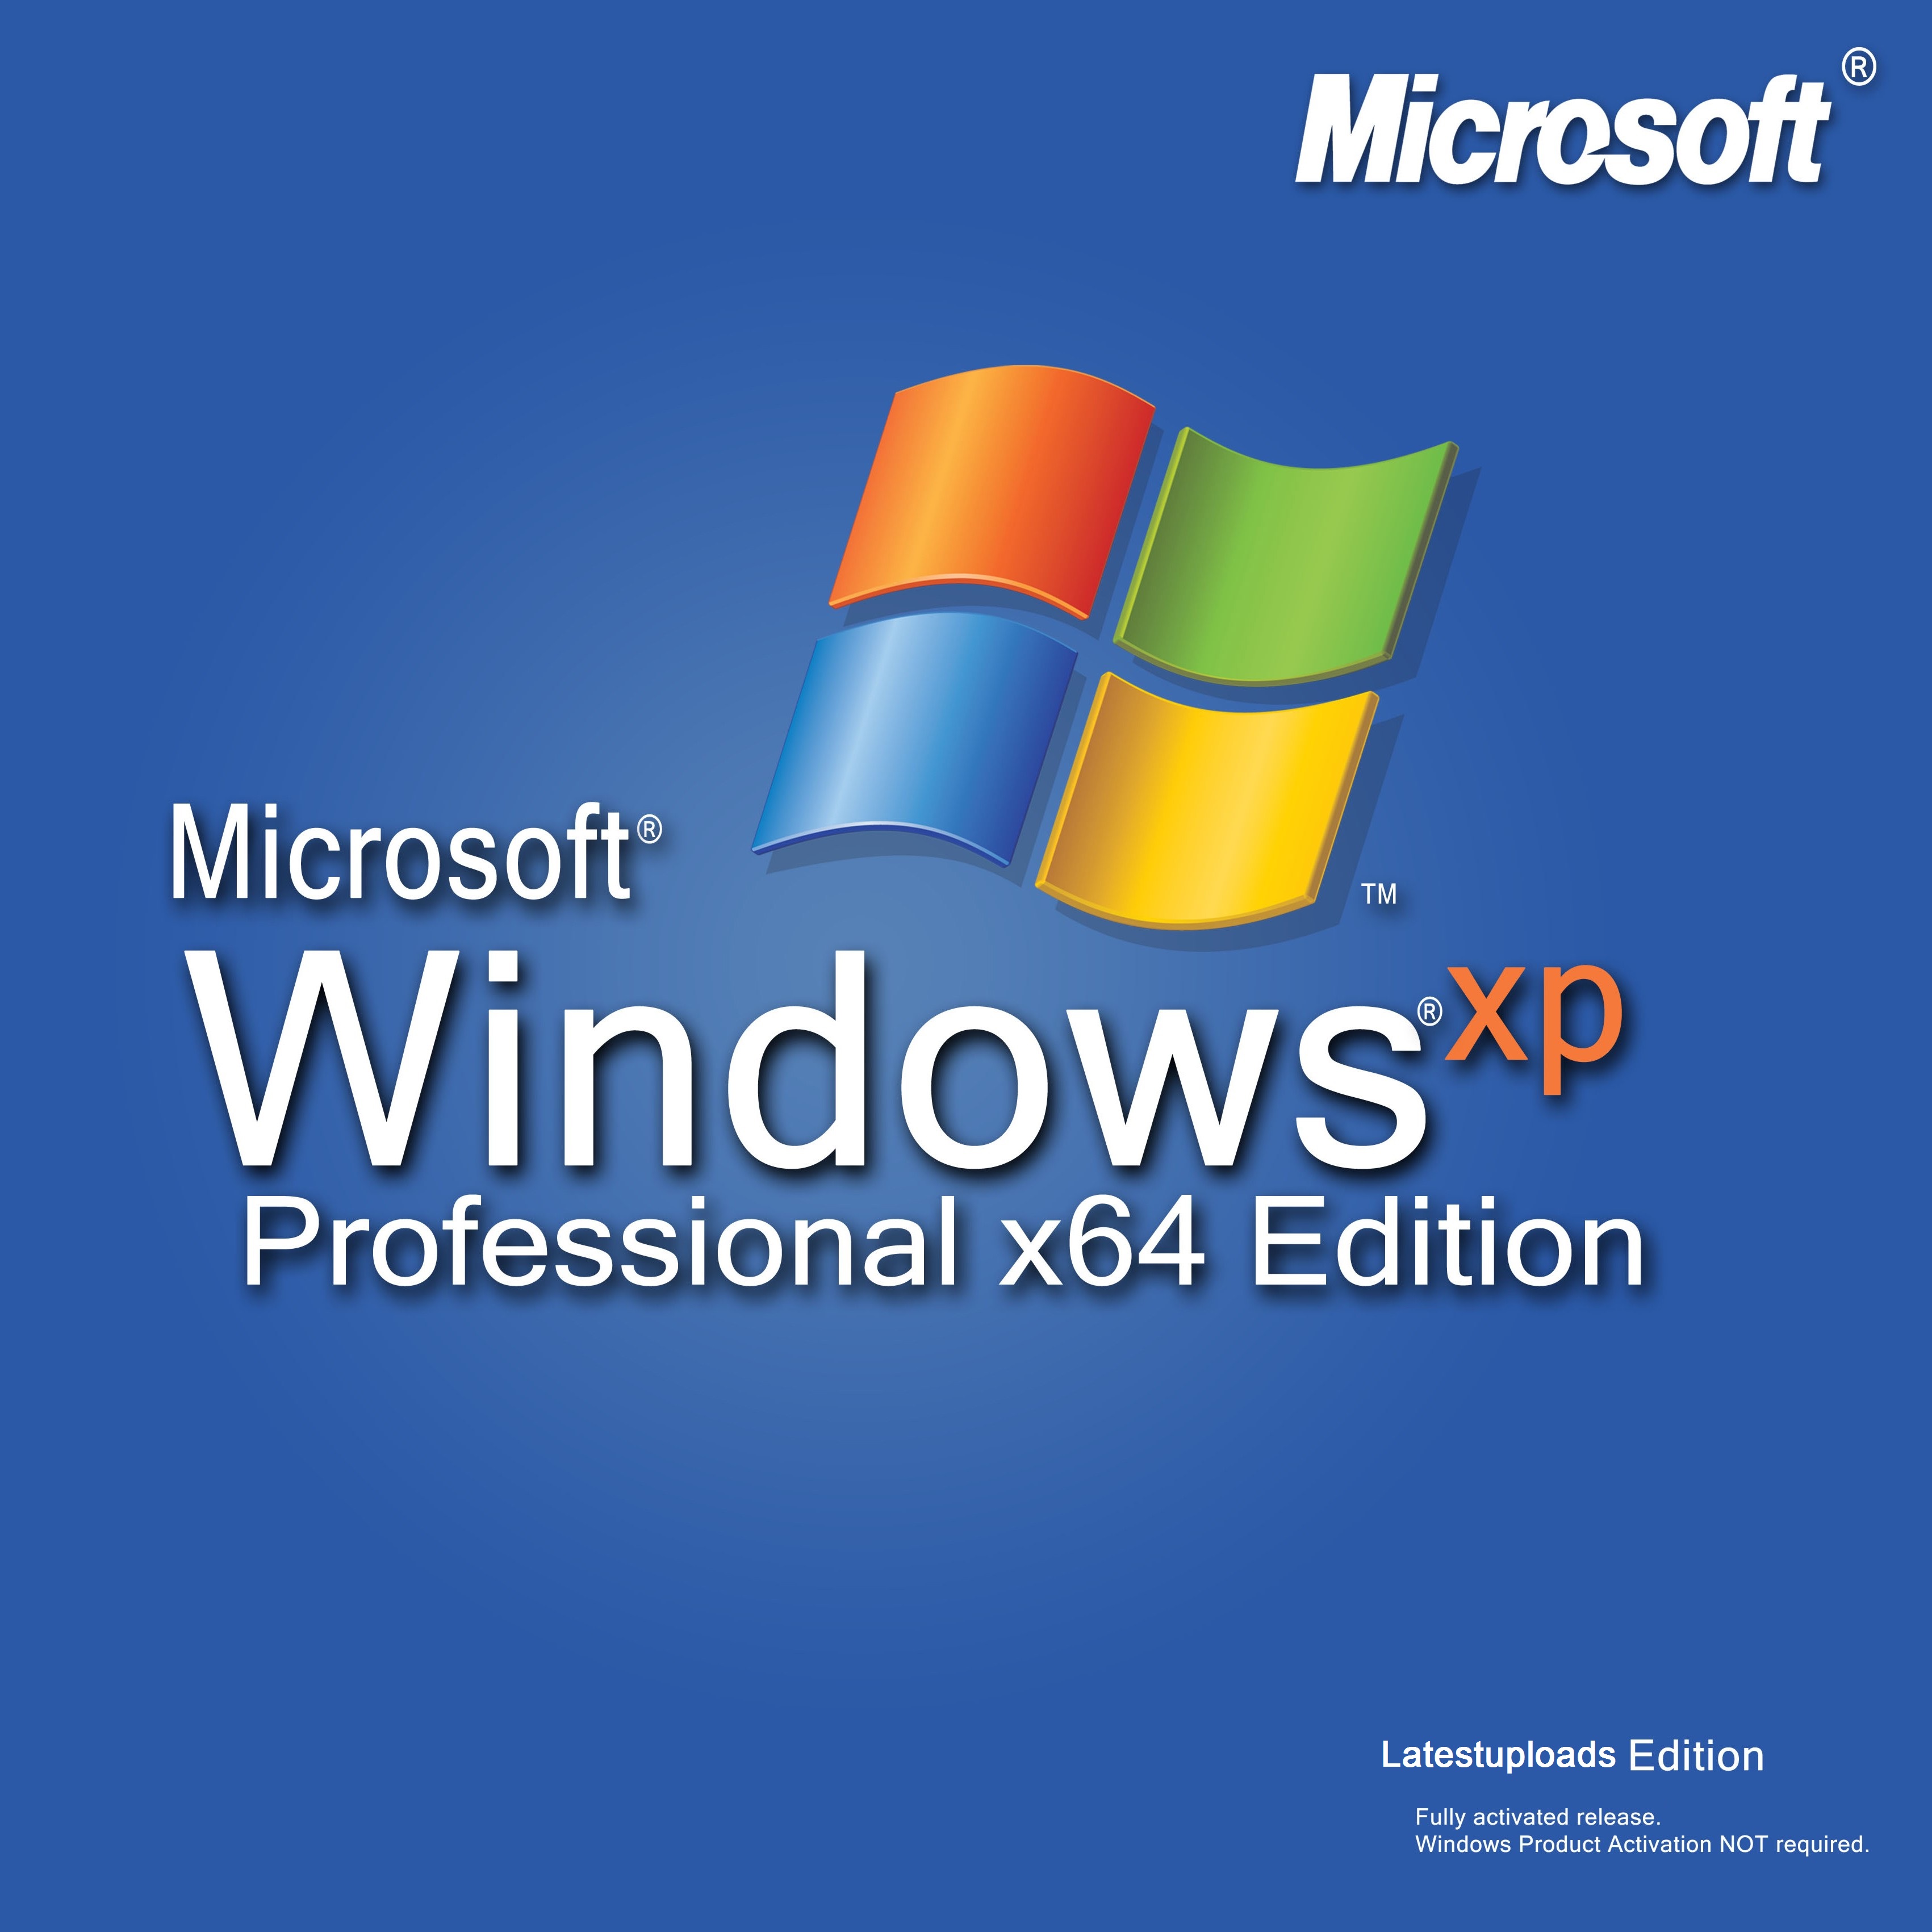 accesschk.exe windows xp sp1 download